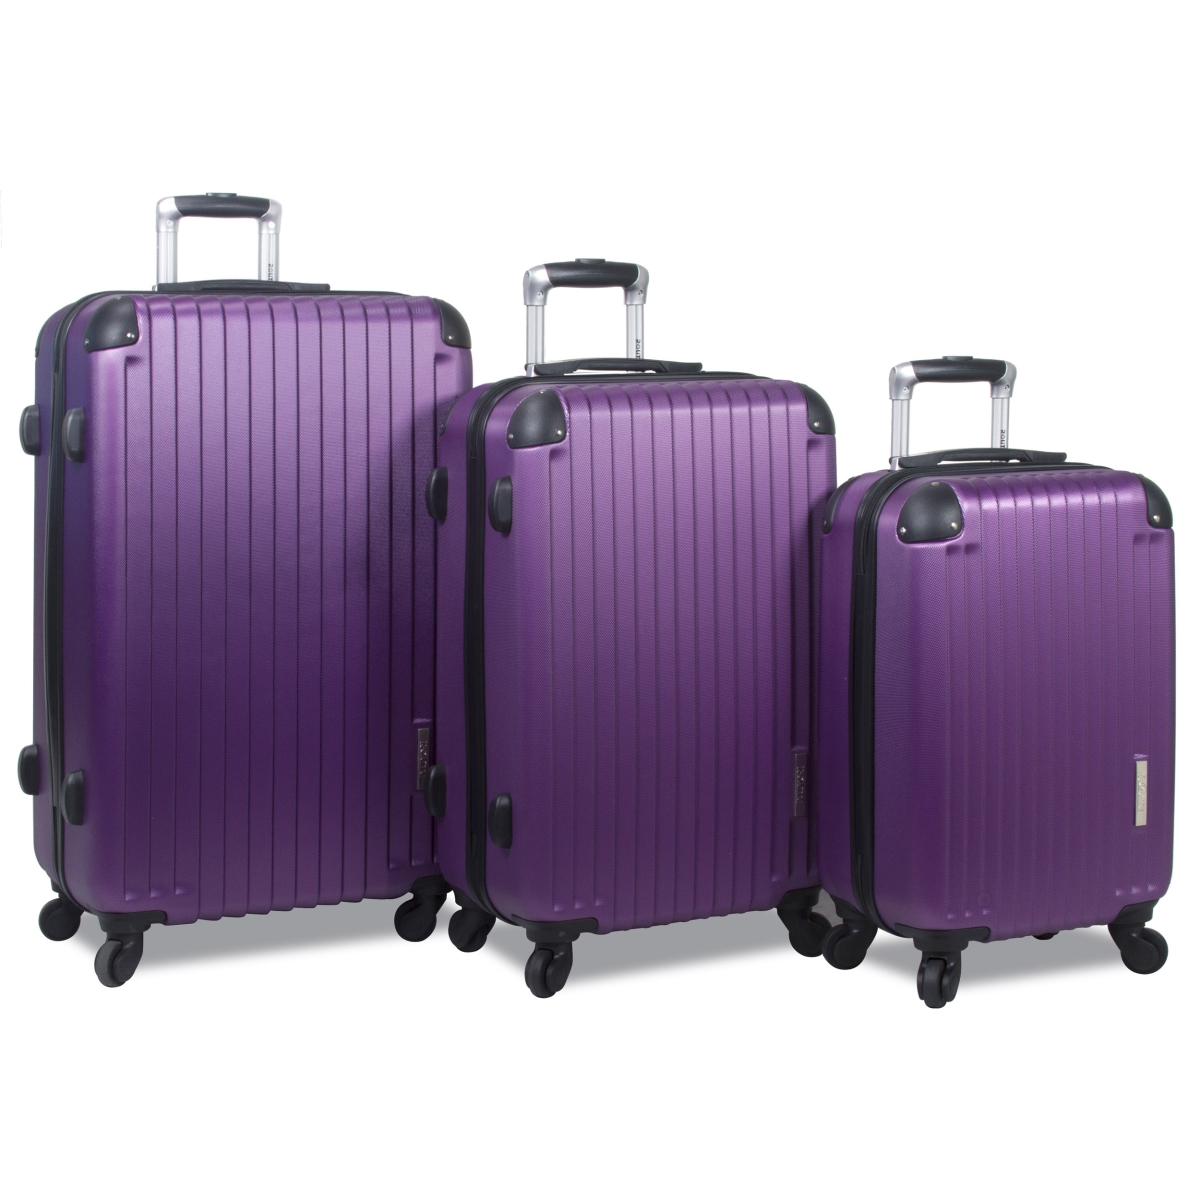 25rl-609-purple Prism Hardside Spinner Combination Lock Luggage Set - Purple, 3 Piece